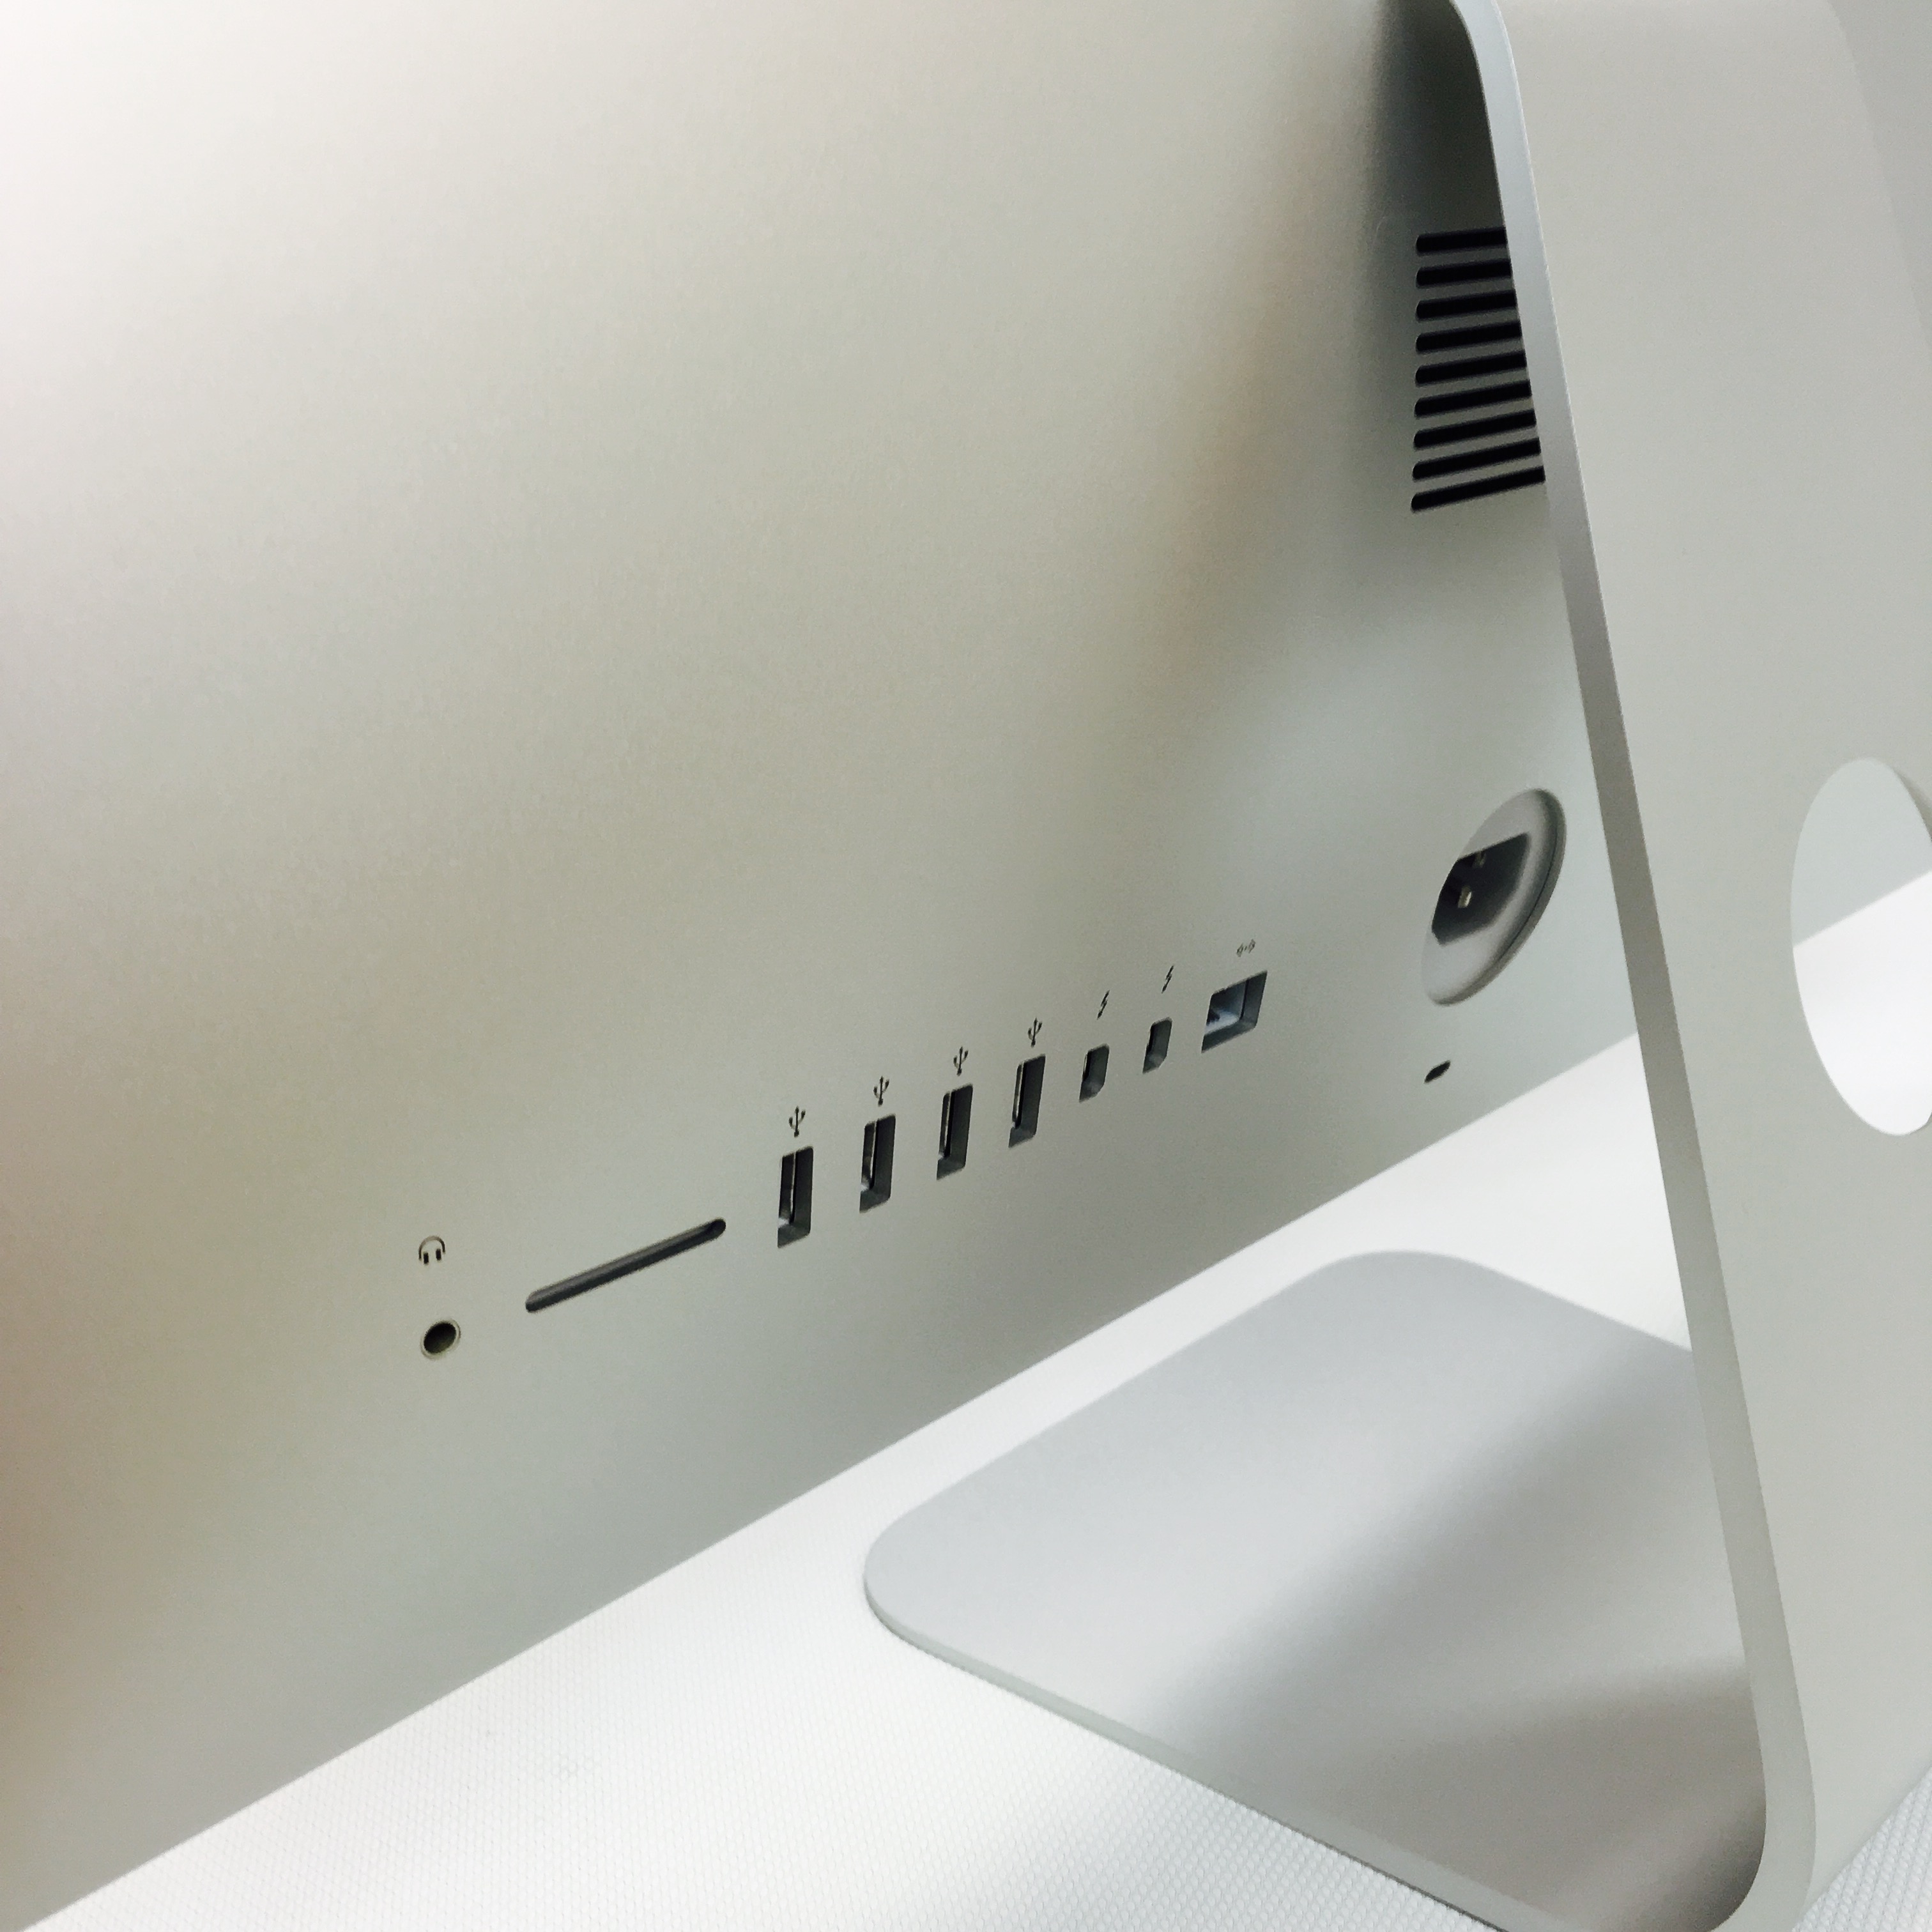 iMac 21.5" Retina 4K Late 2015 (Intel Quad-Core i5 3.1 GHz 8 GB RAM 256 GB SSD), Intel Quad-Core i5 3.1 GHz, 8 GB RAM, 256 GB SSD, image 3